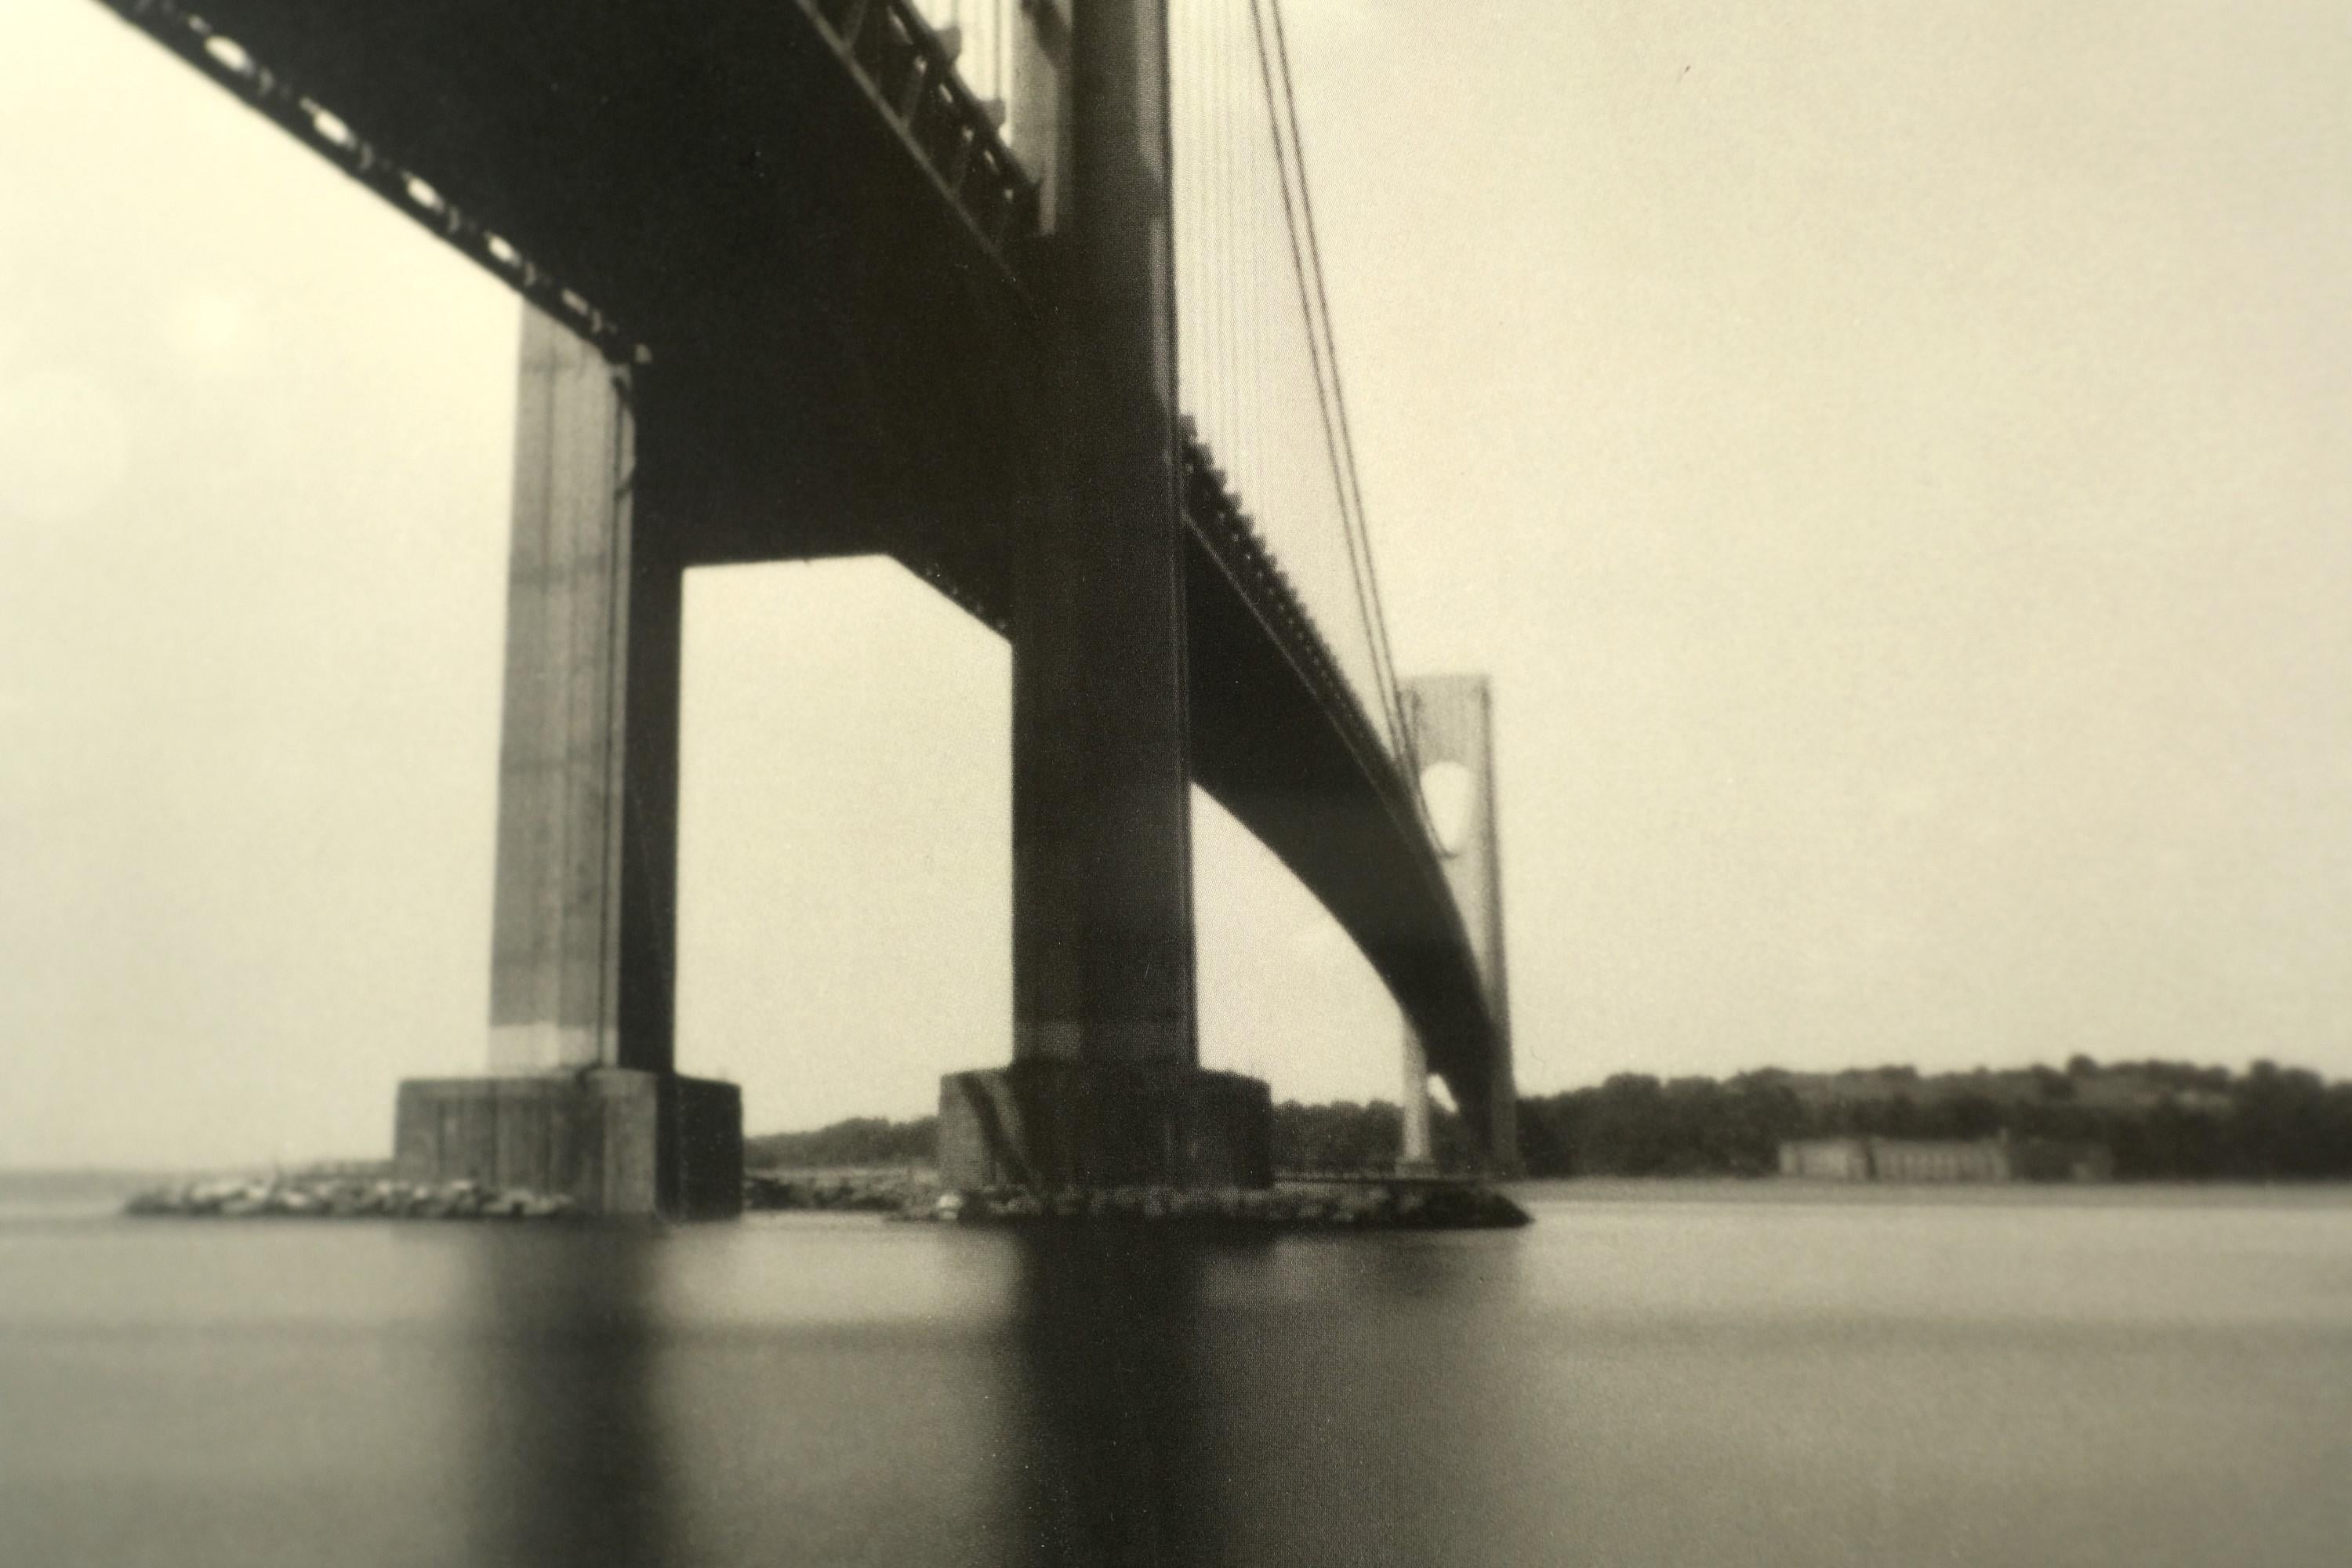 American Framed Photograph of Verrazano Bridge from the Hotel Pennsylvania